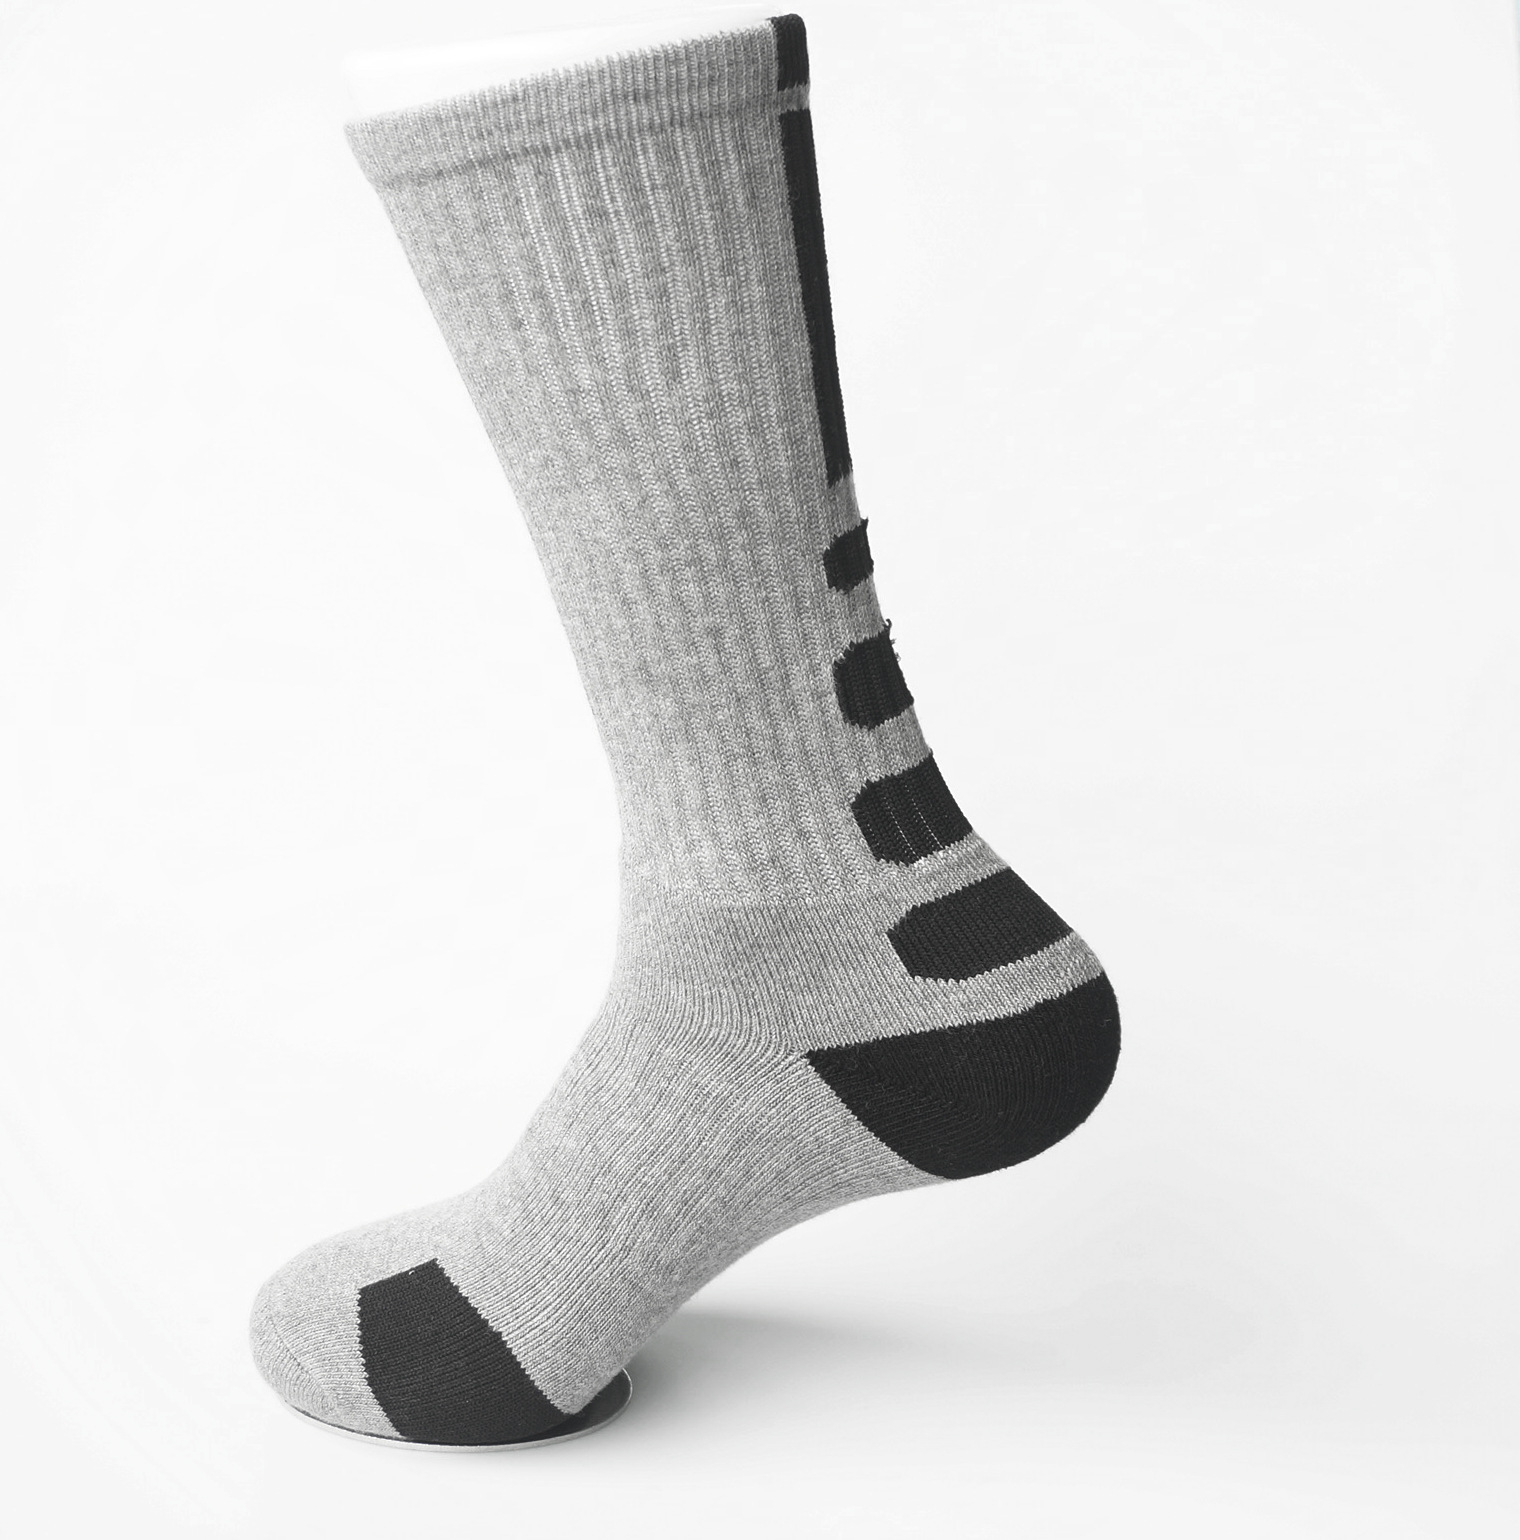 Baseball Crew Compression Socks Thick Towel Bottom Volleyball Socks Slip Resistant Socks Sports Socks for Varicose Veins